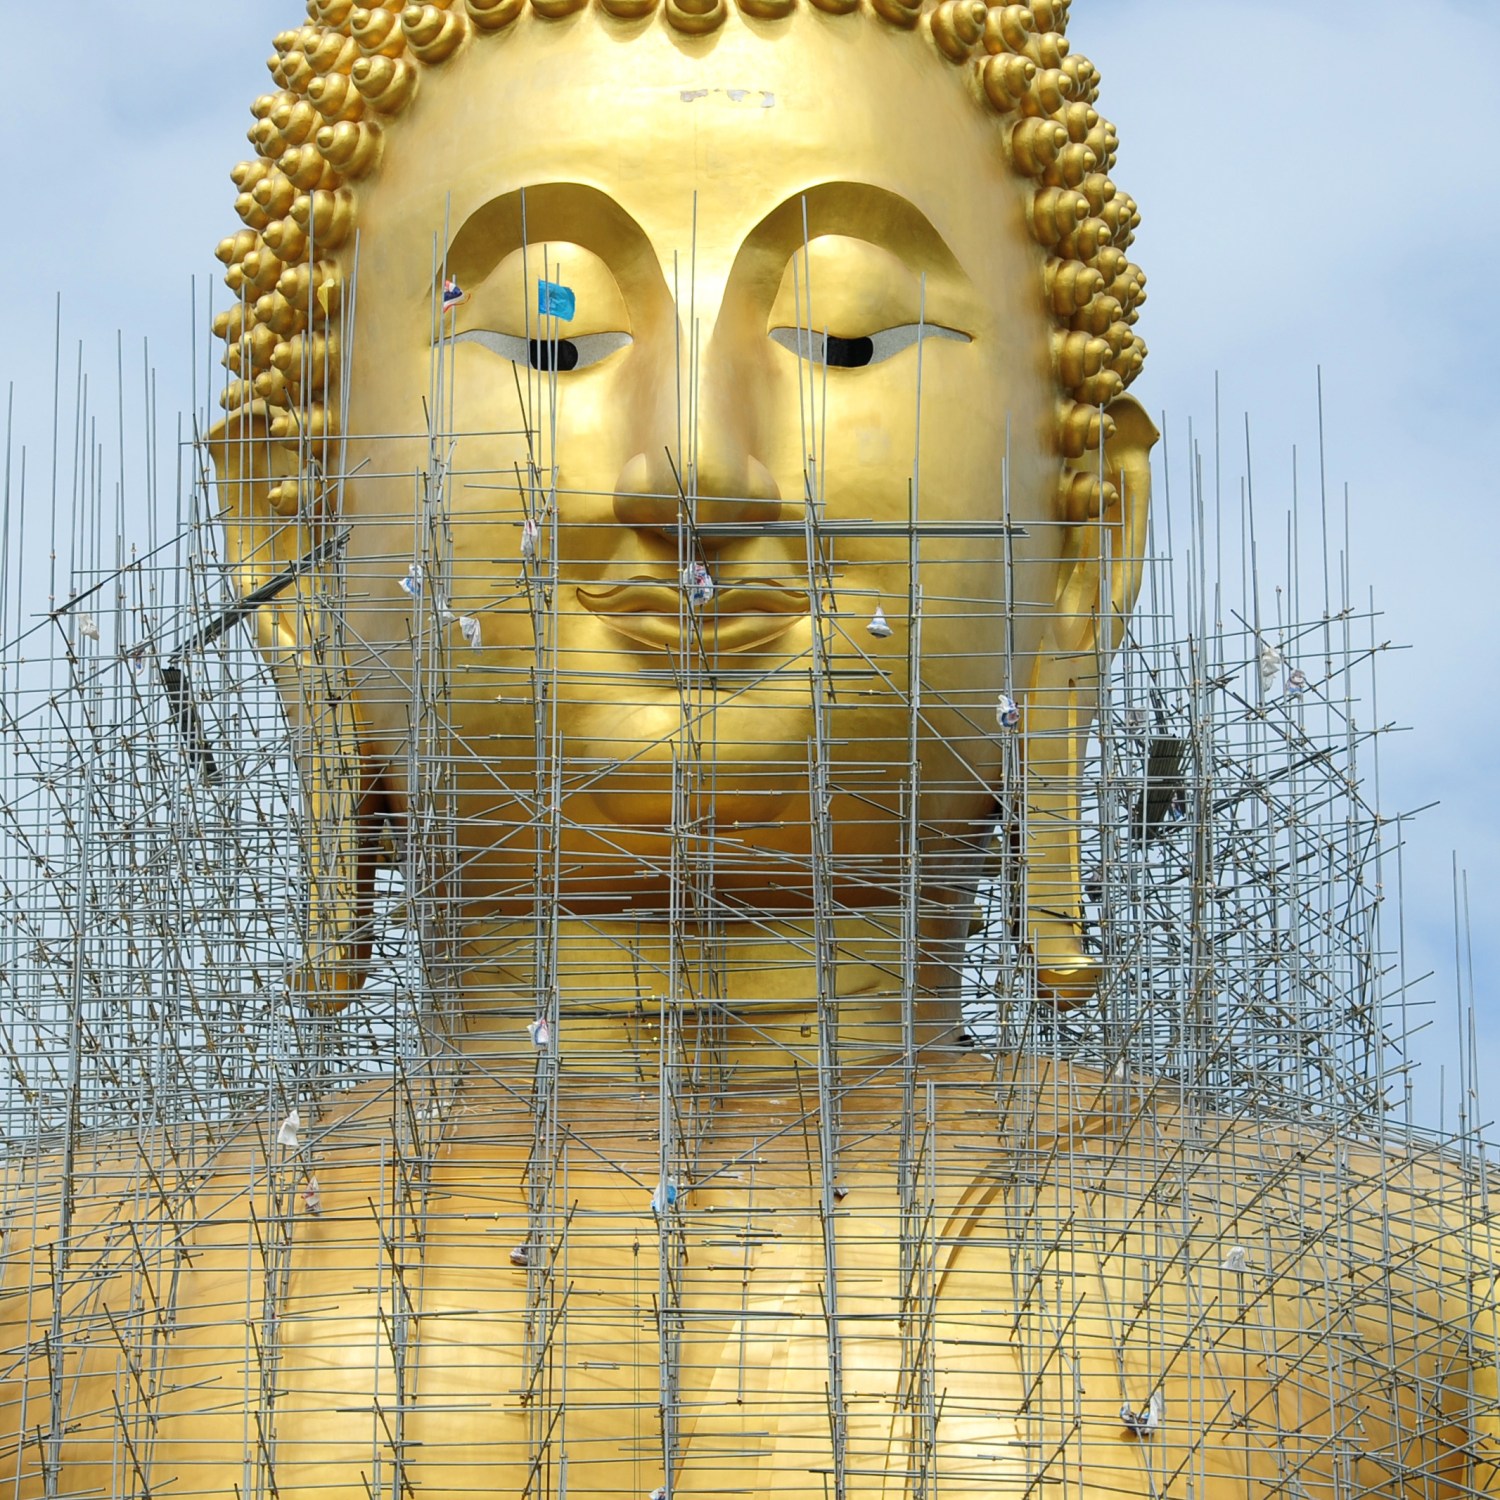 Buddha statue under renovation